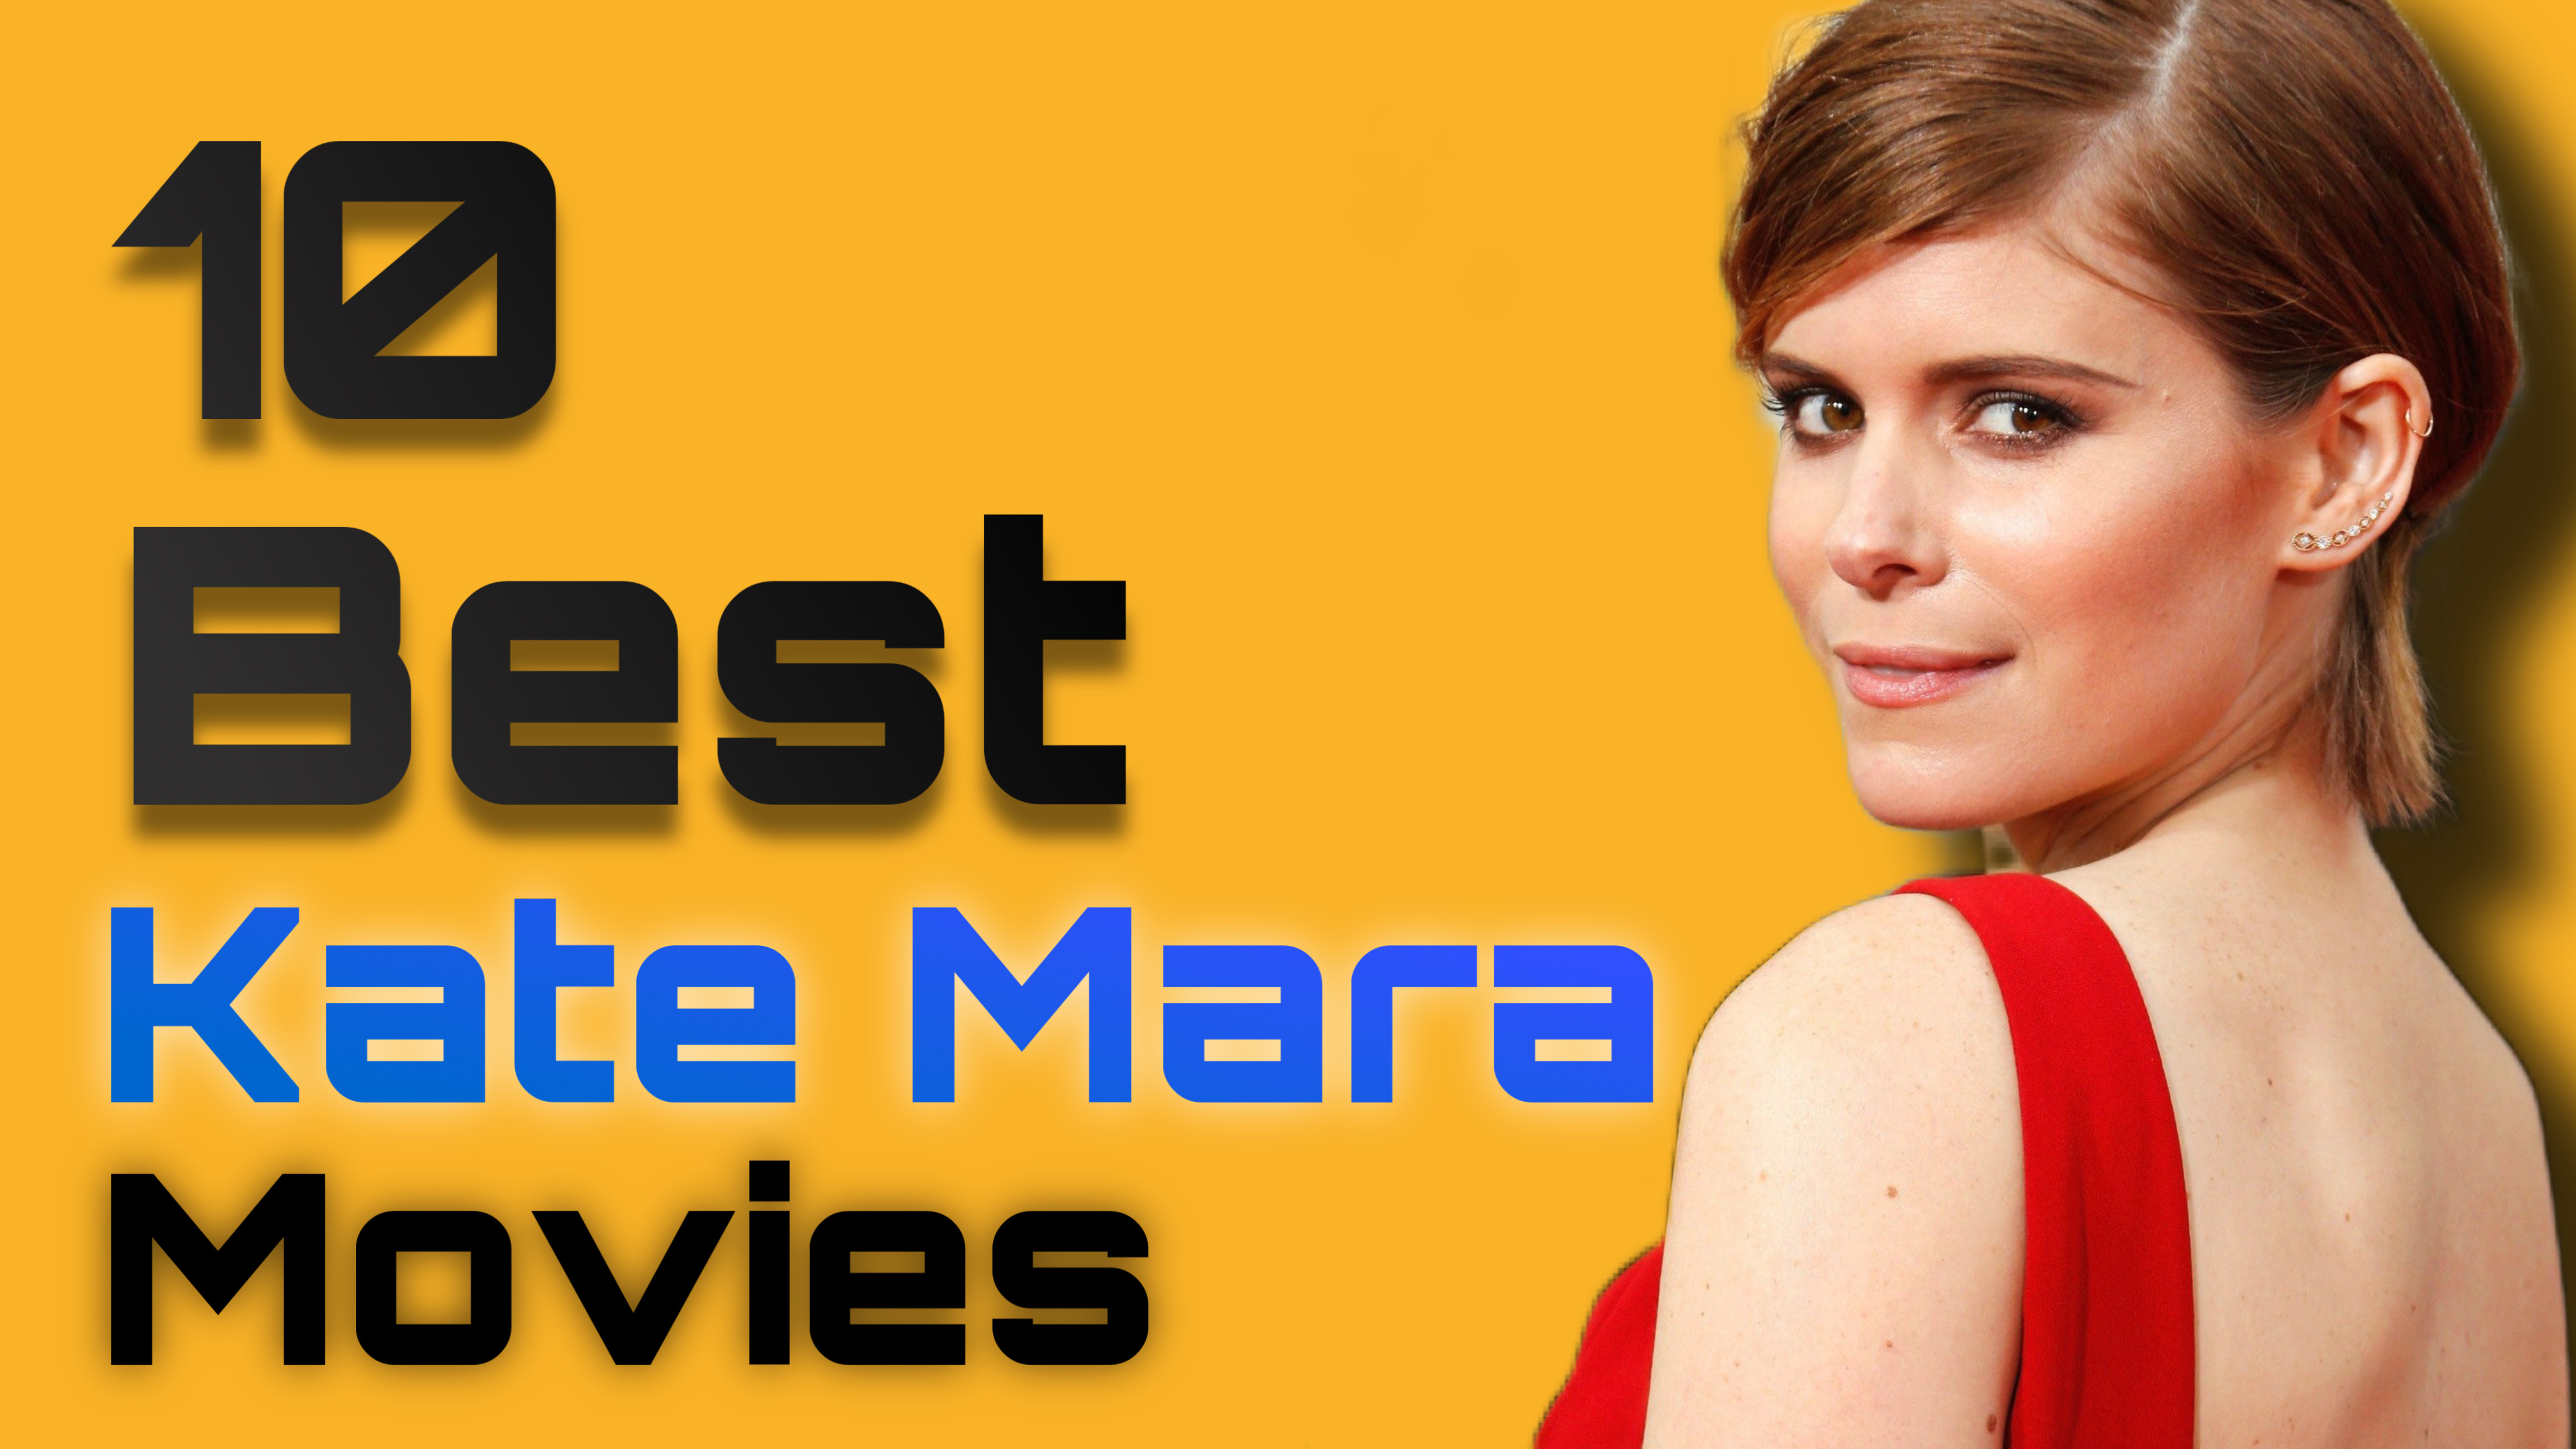 10 Best Kate Mara Movies To Watch Tonight.